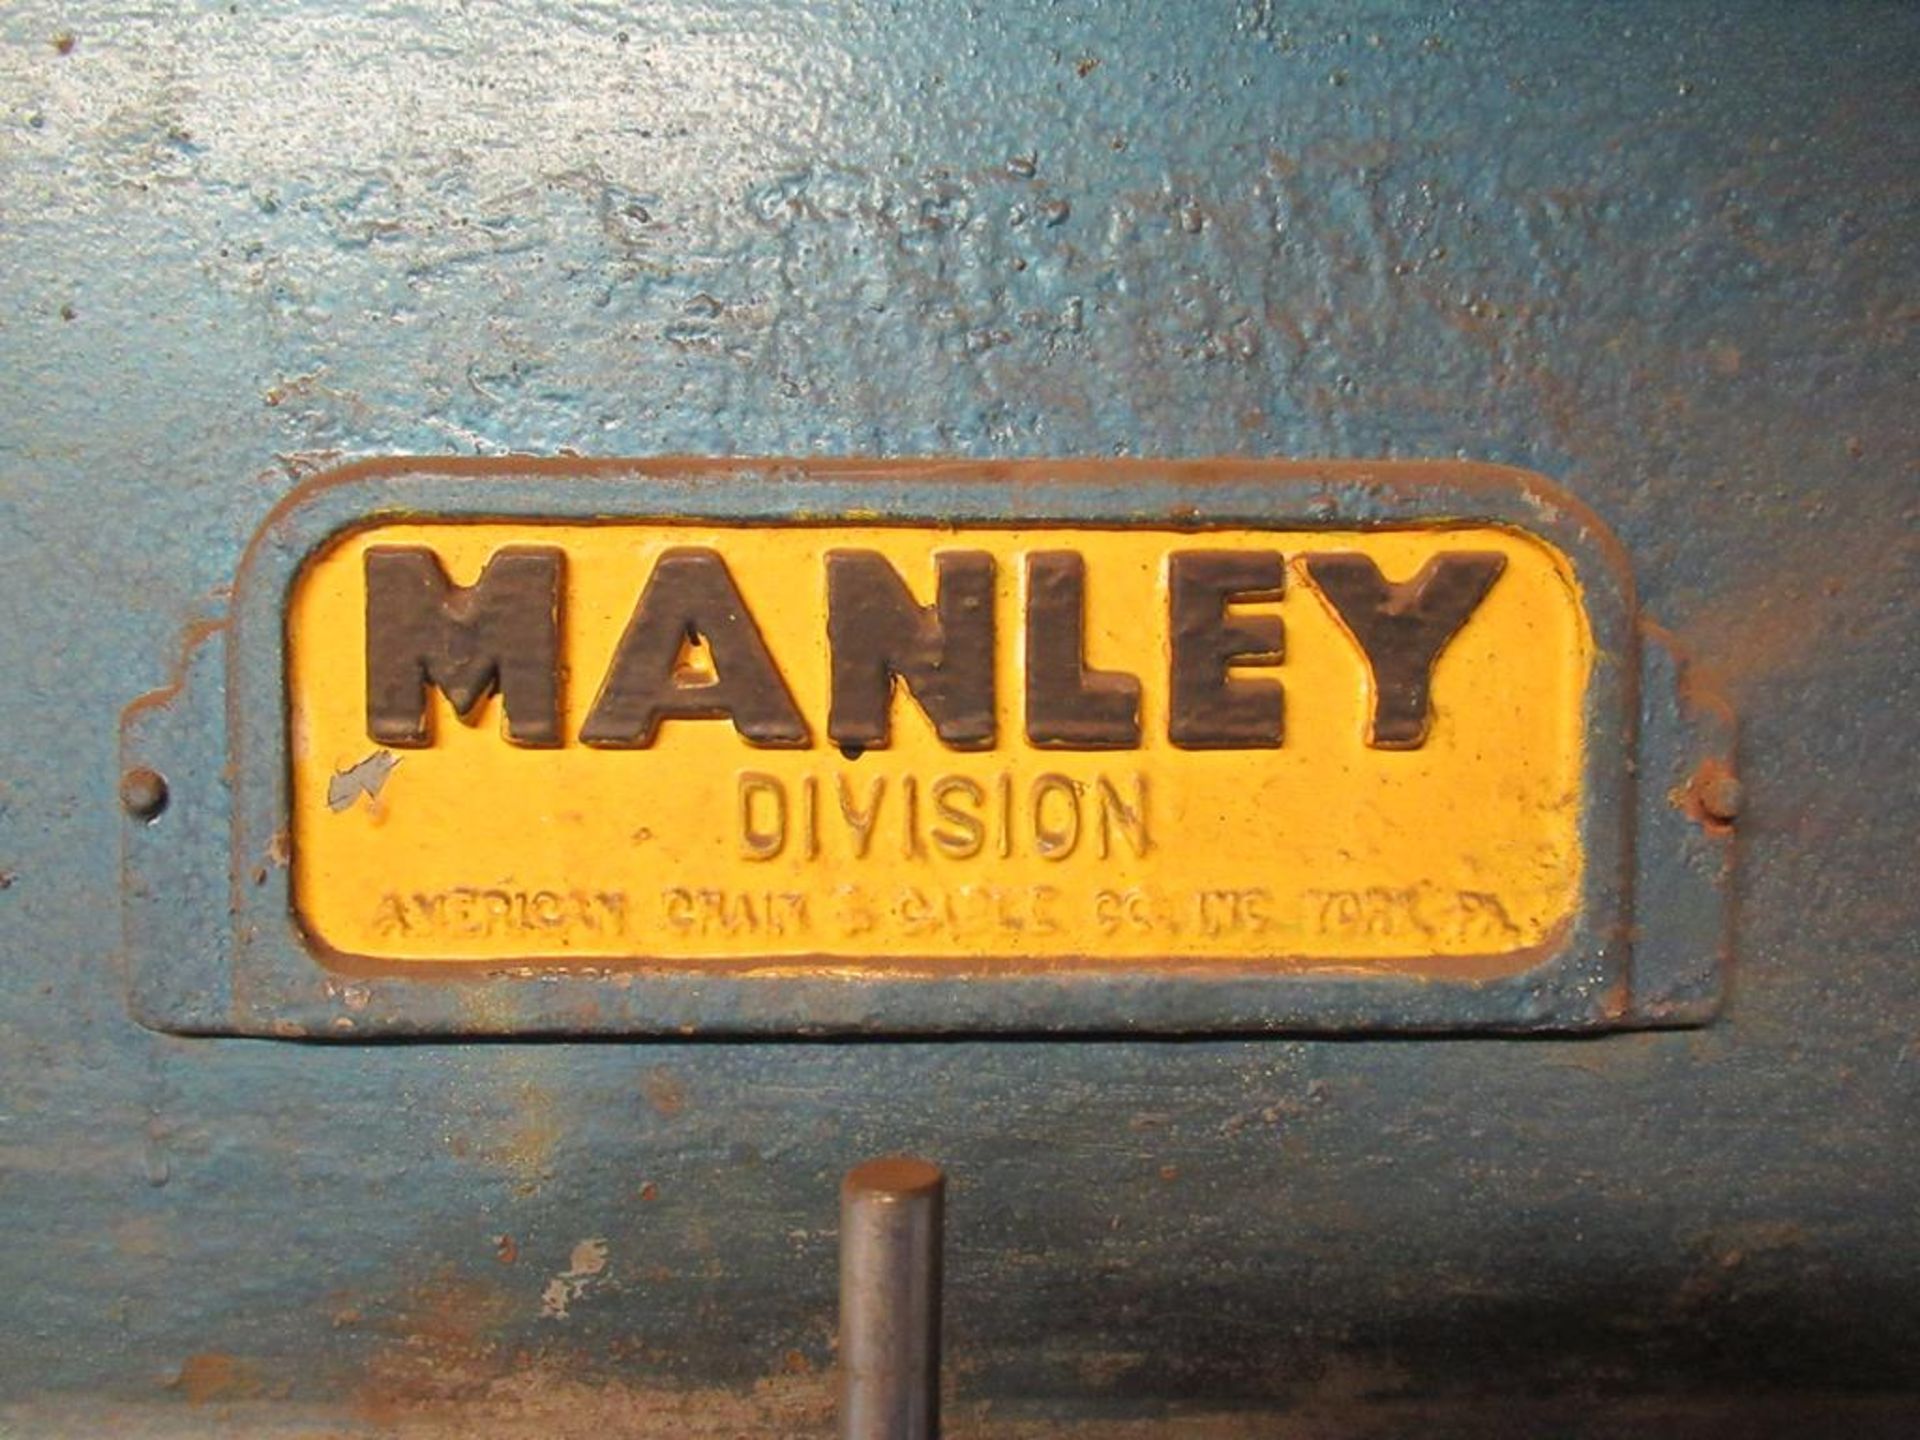 Manley heavy duty hydraulic vertical workshop press - Image 3 of 5